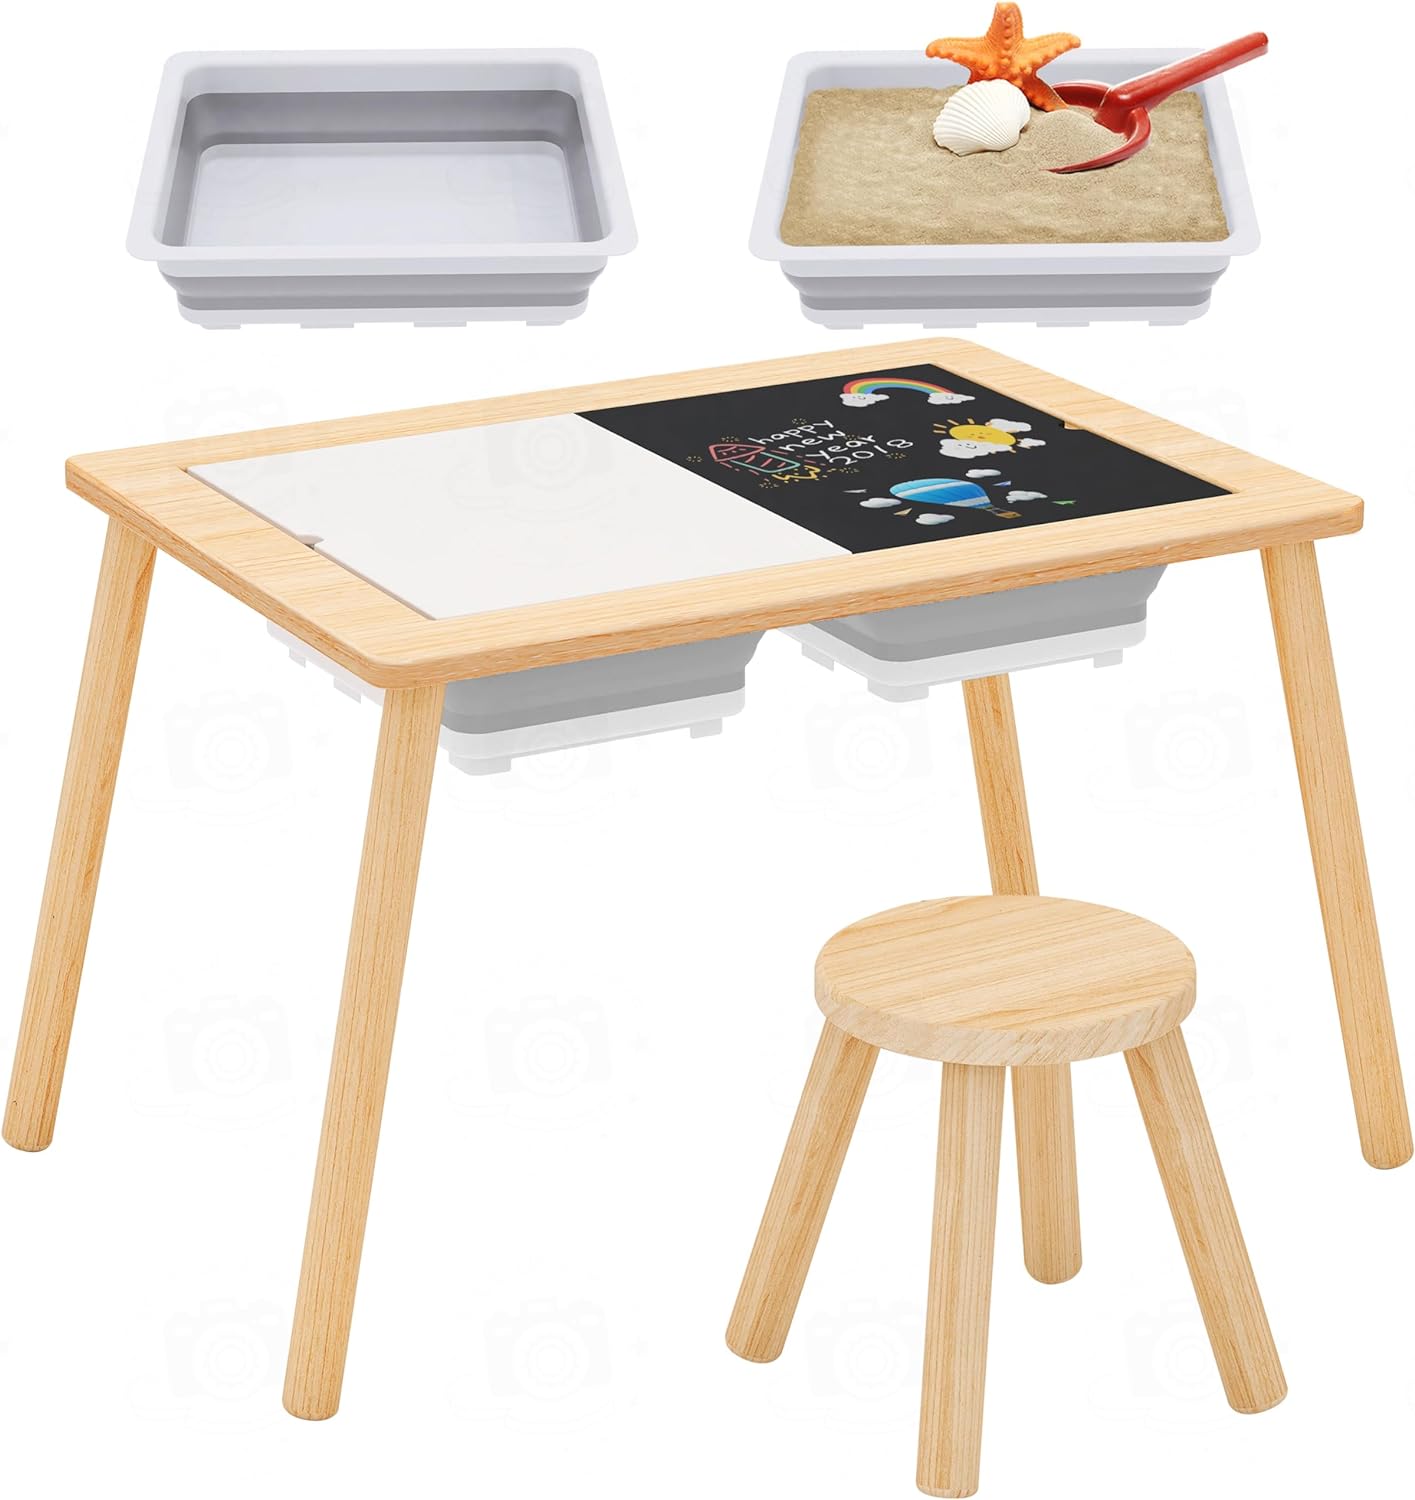 Beeneo Sensory Table, Kid's Table Play Sand Table Indoor